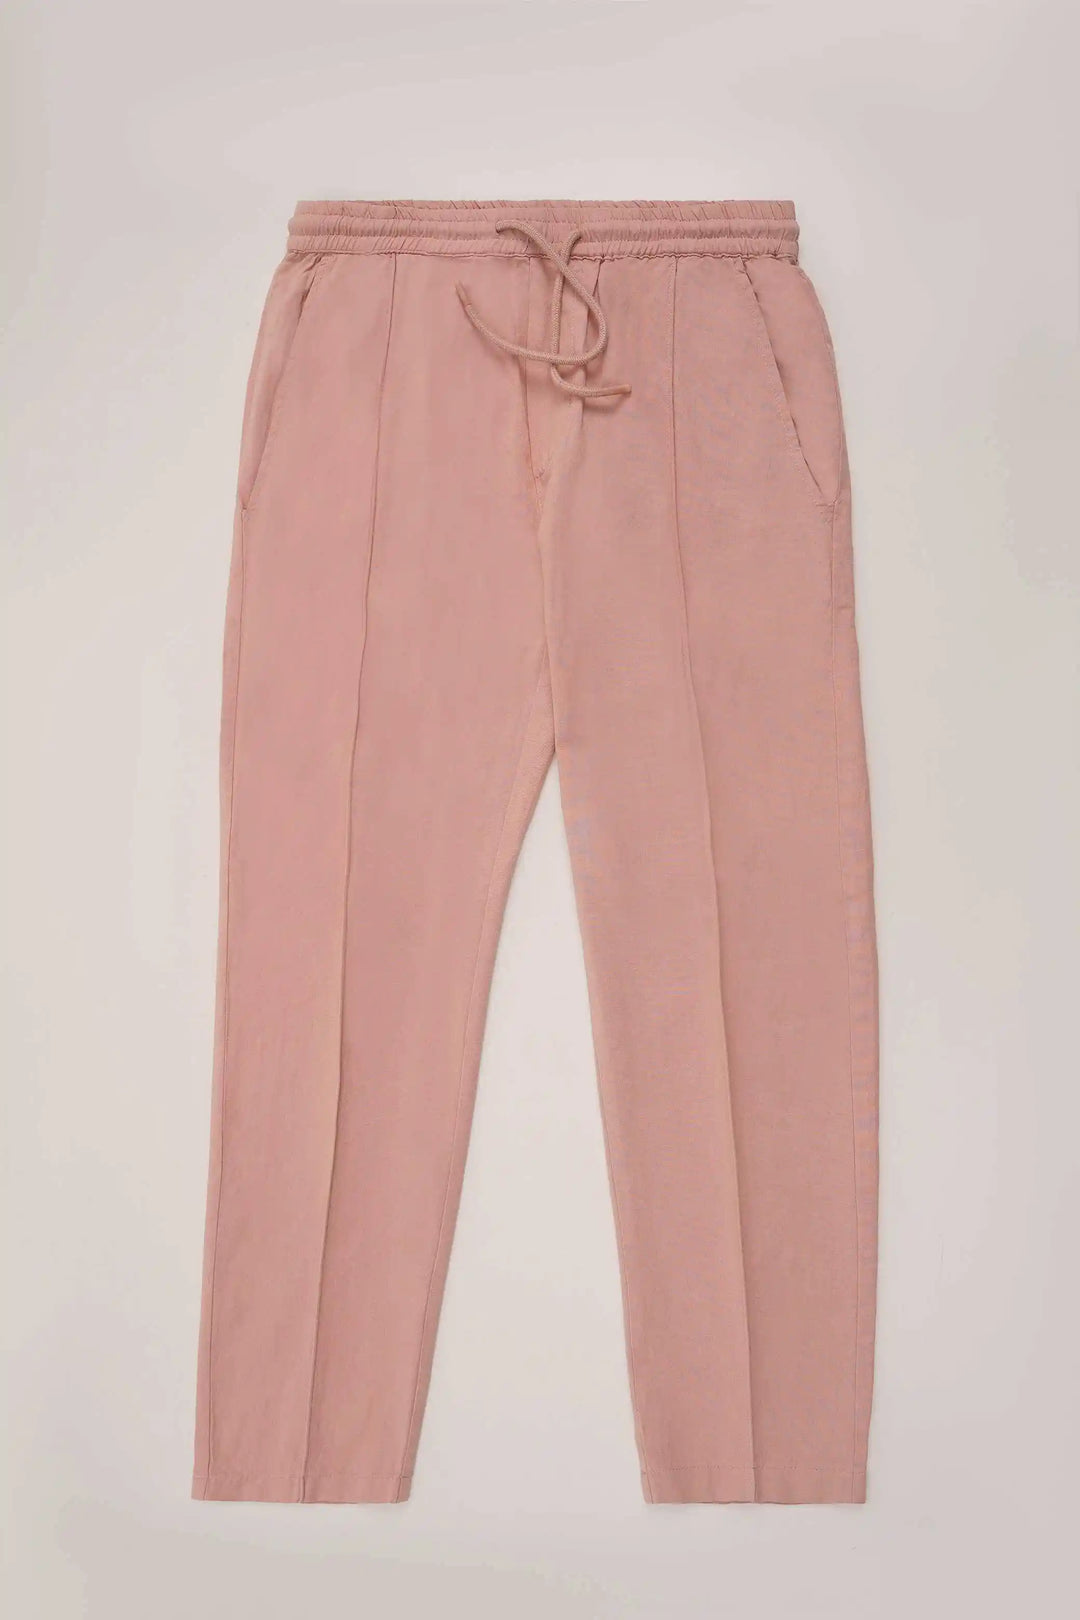 Tea Pink Linen Pants